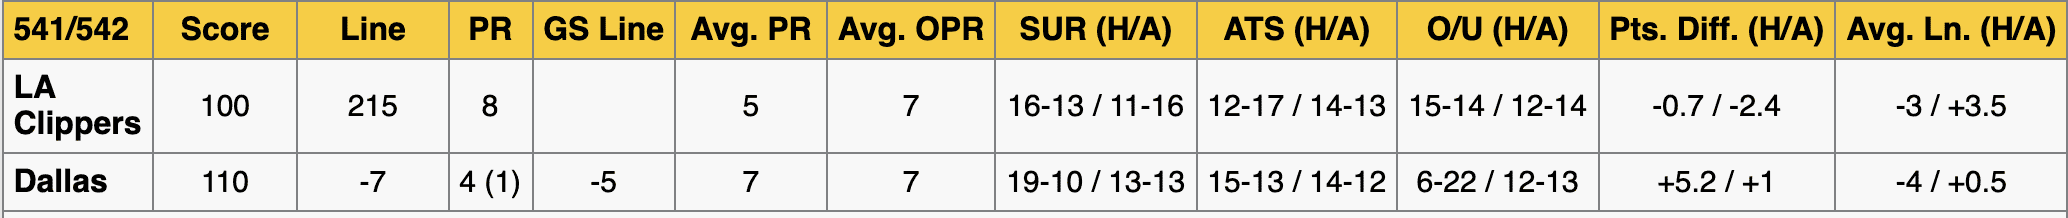 Mavericks vs Clippers Stats